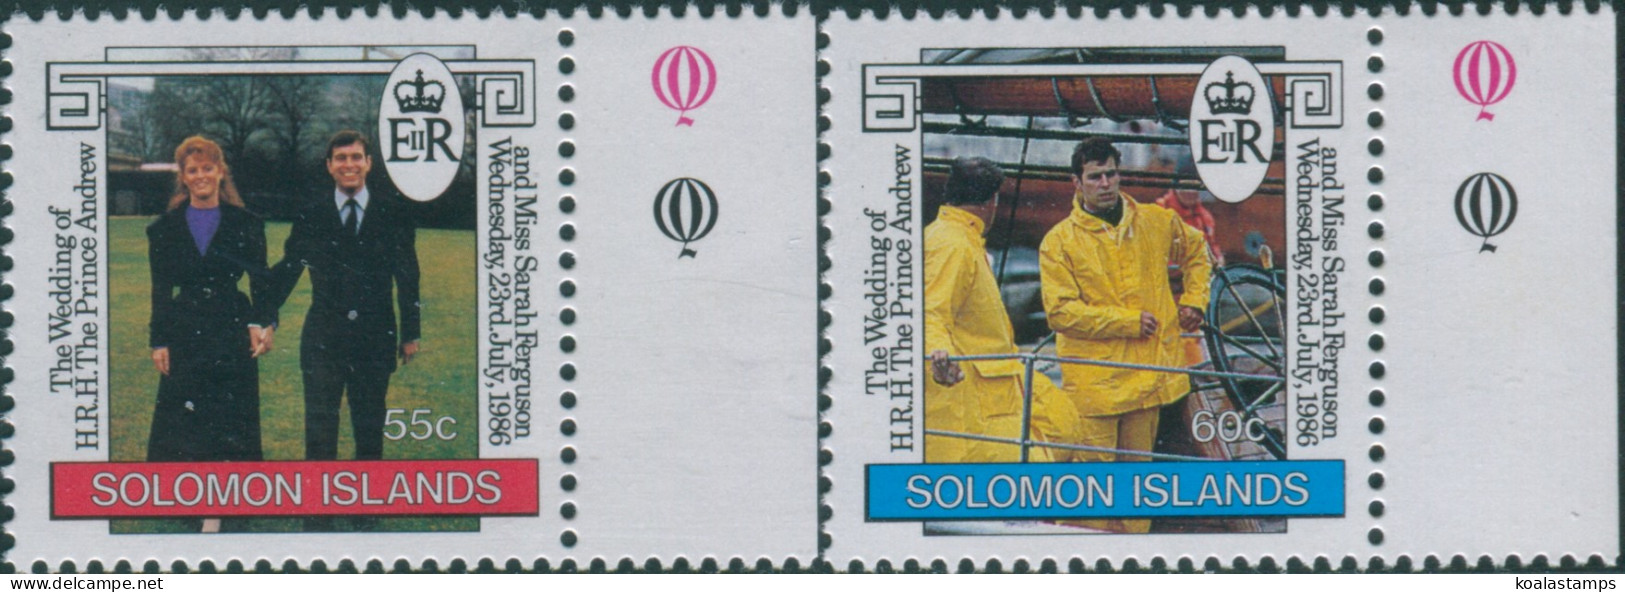 Solomon Islands 1986 SG568-569 Royal Wedding Set MNH - Solomon Islands (1978-...)